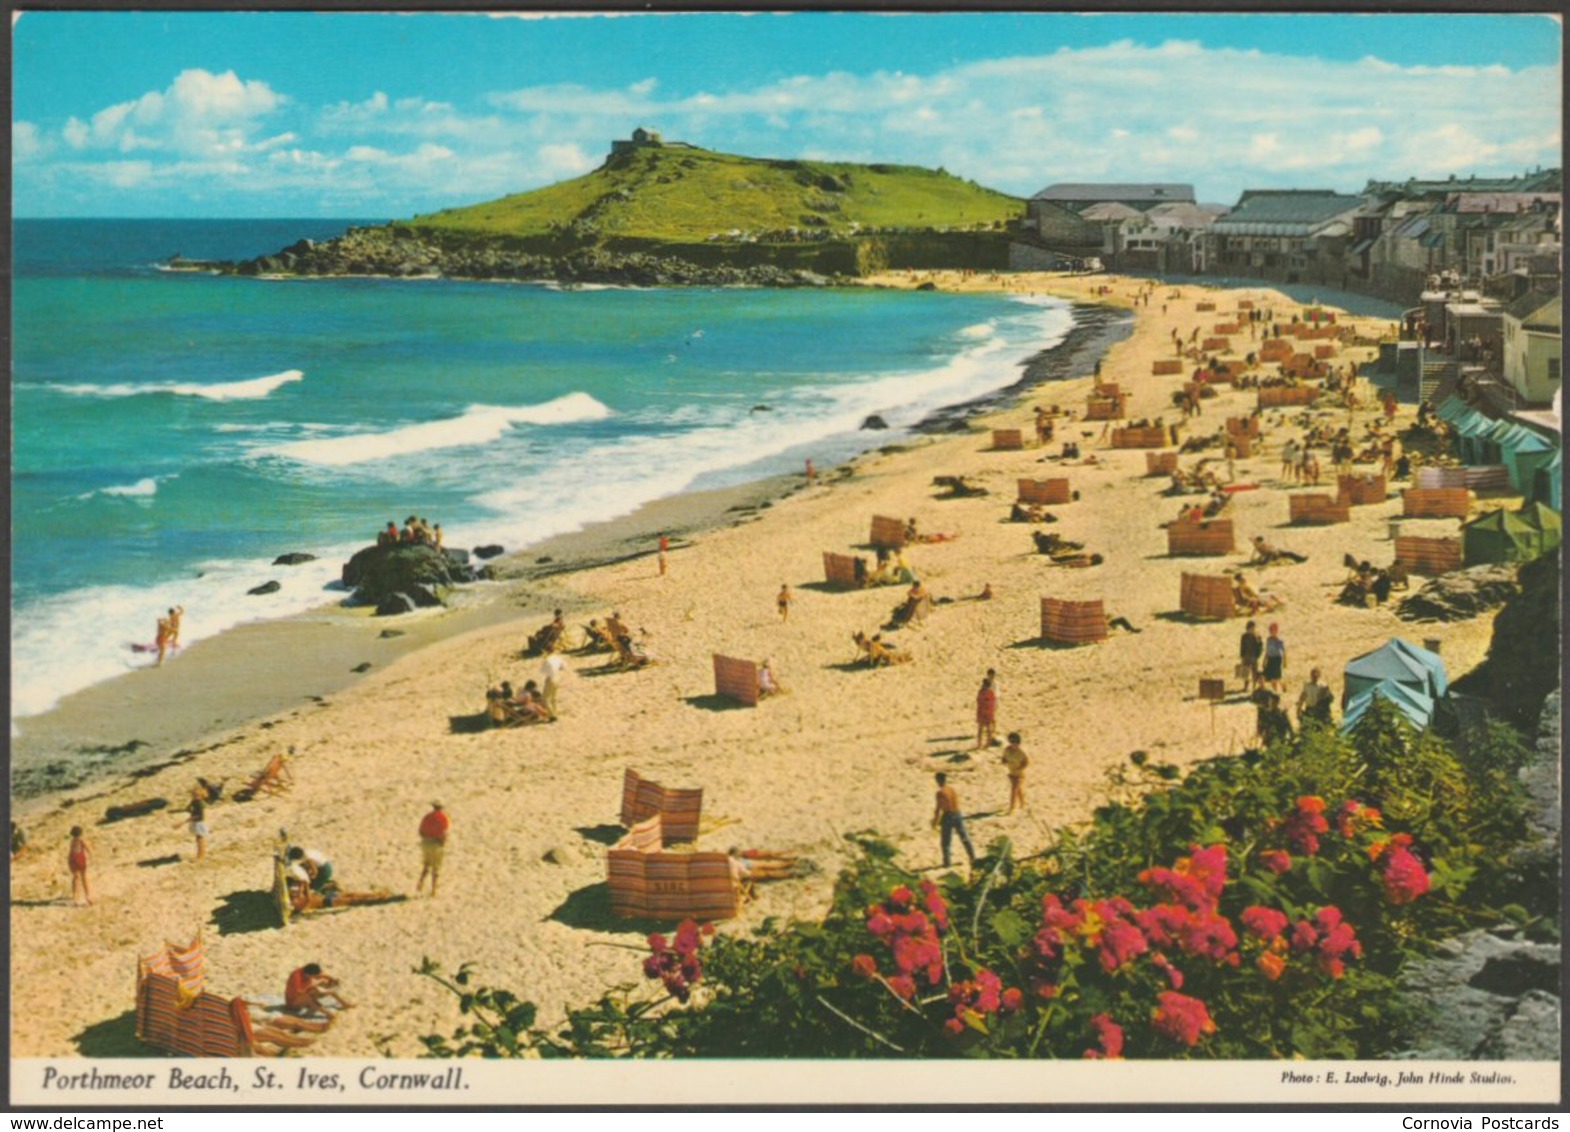 Porthmeor Beach, St Ives, Cornwall, C.1970s - John Hinde Postcard - St.Ives